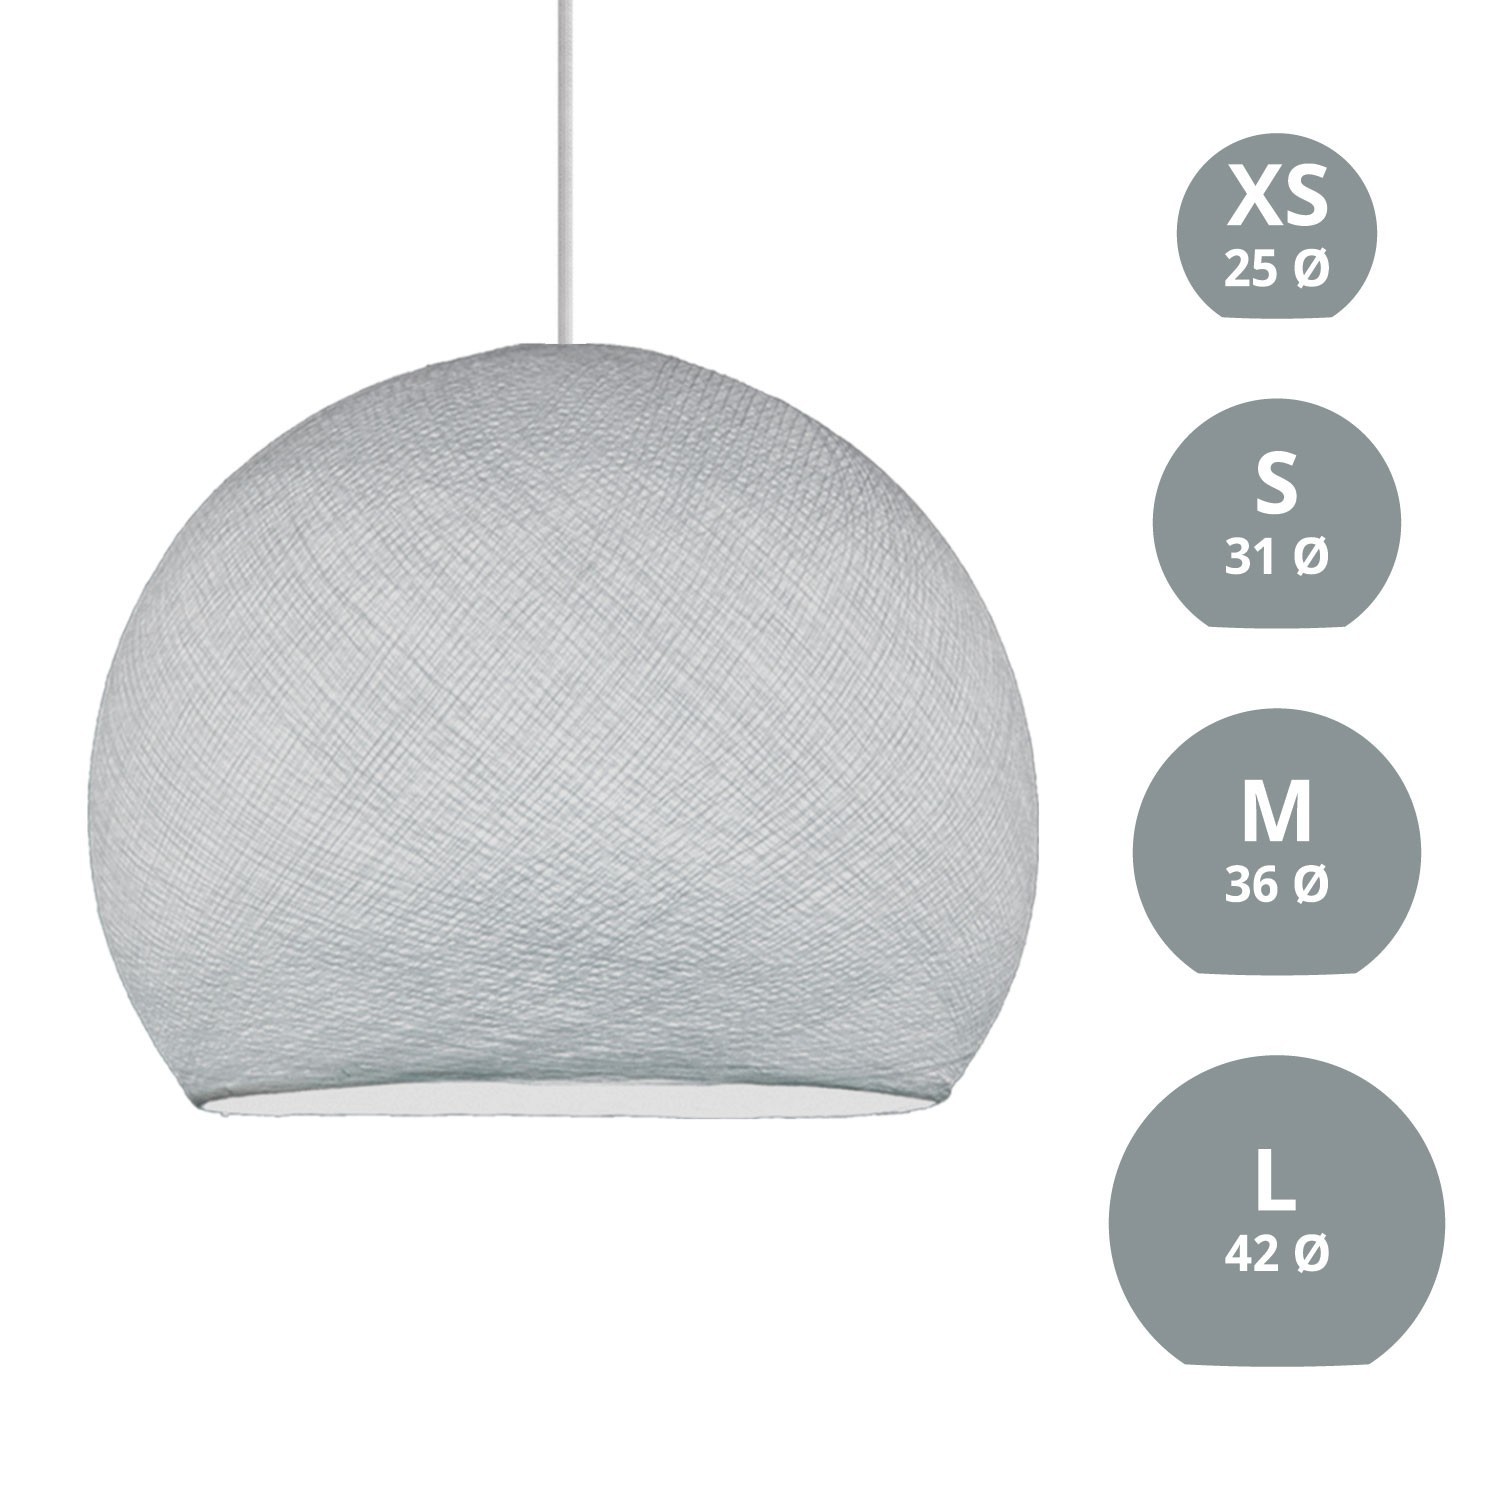 Cupola fiber lampskärm - 100% handgjord